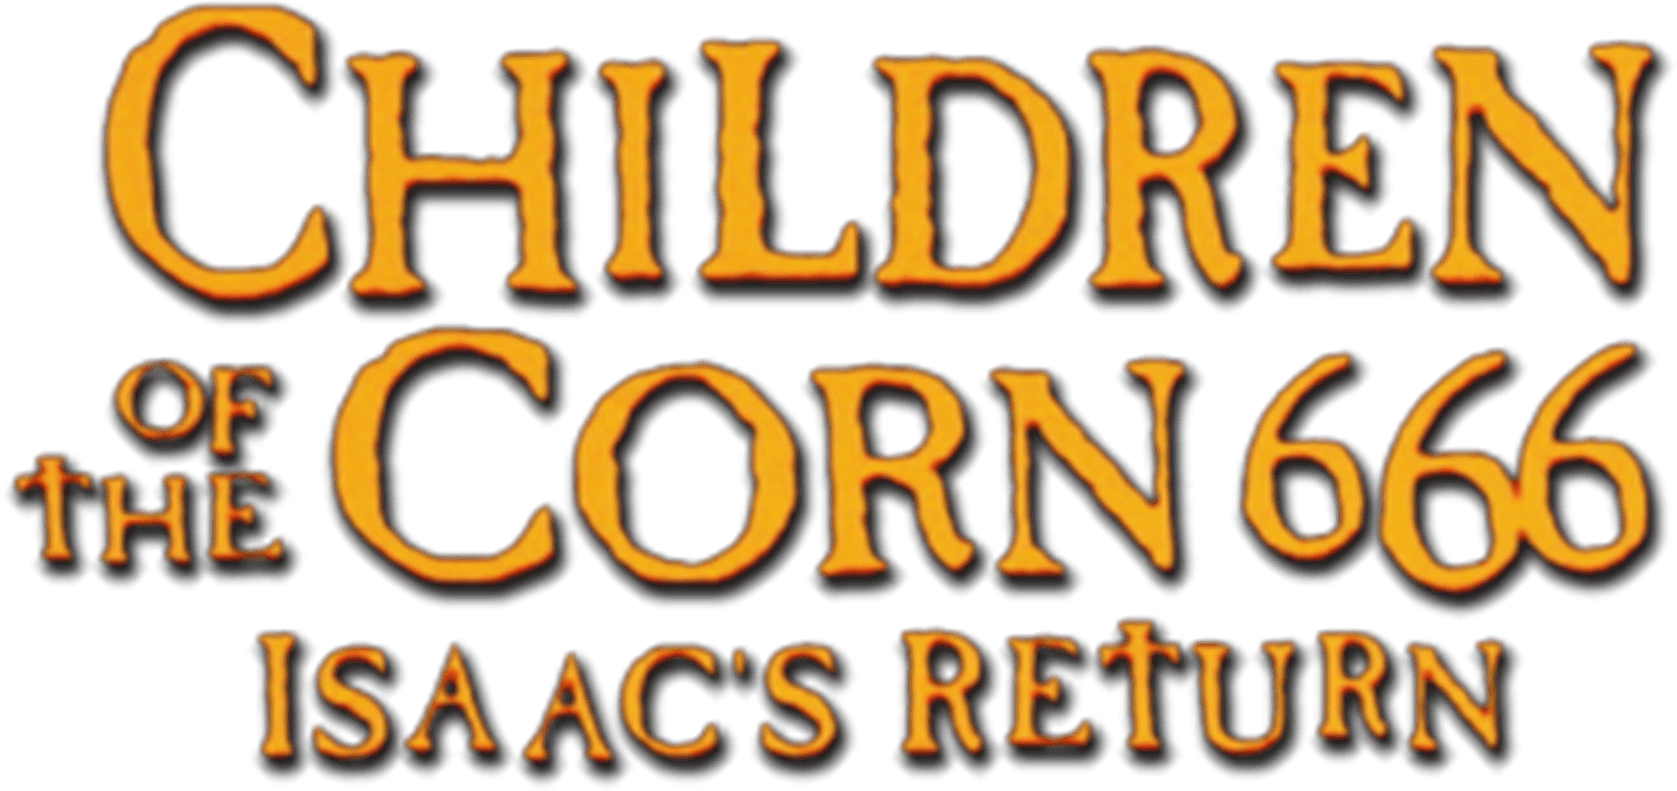 Children of the Corn 666: Isaac's Return logo